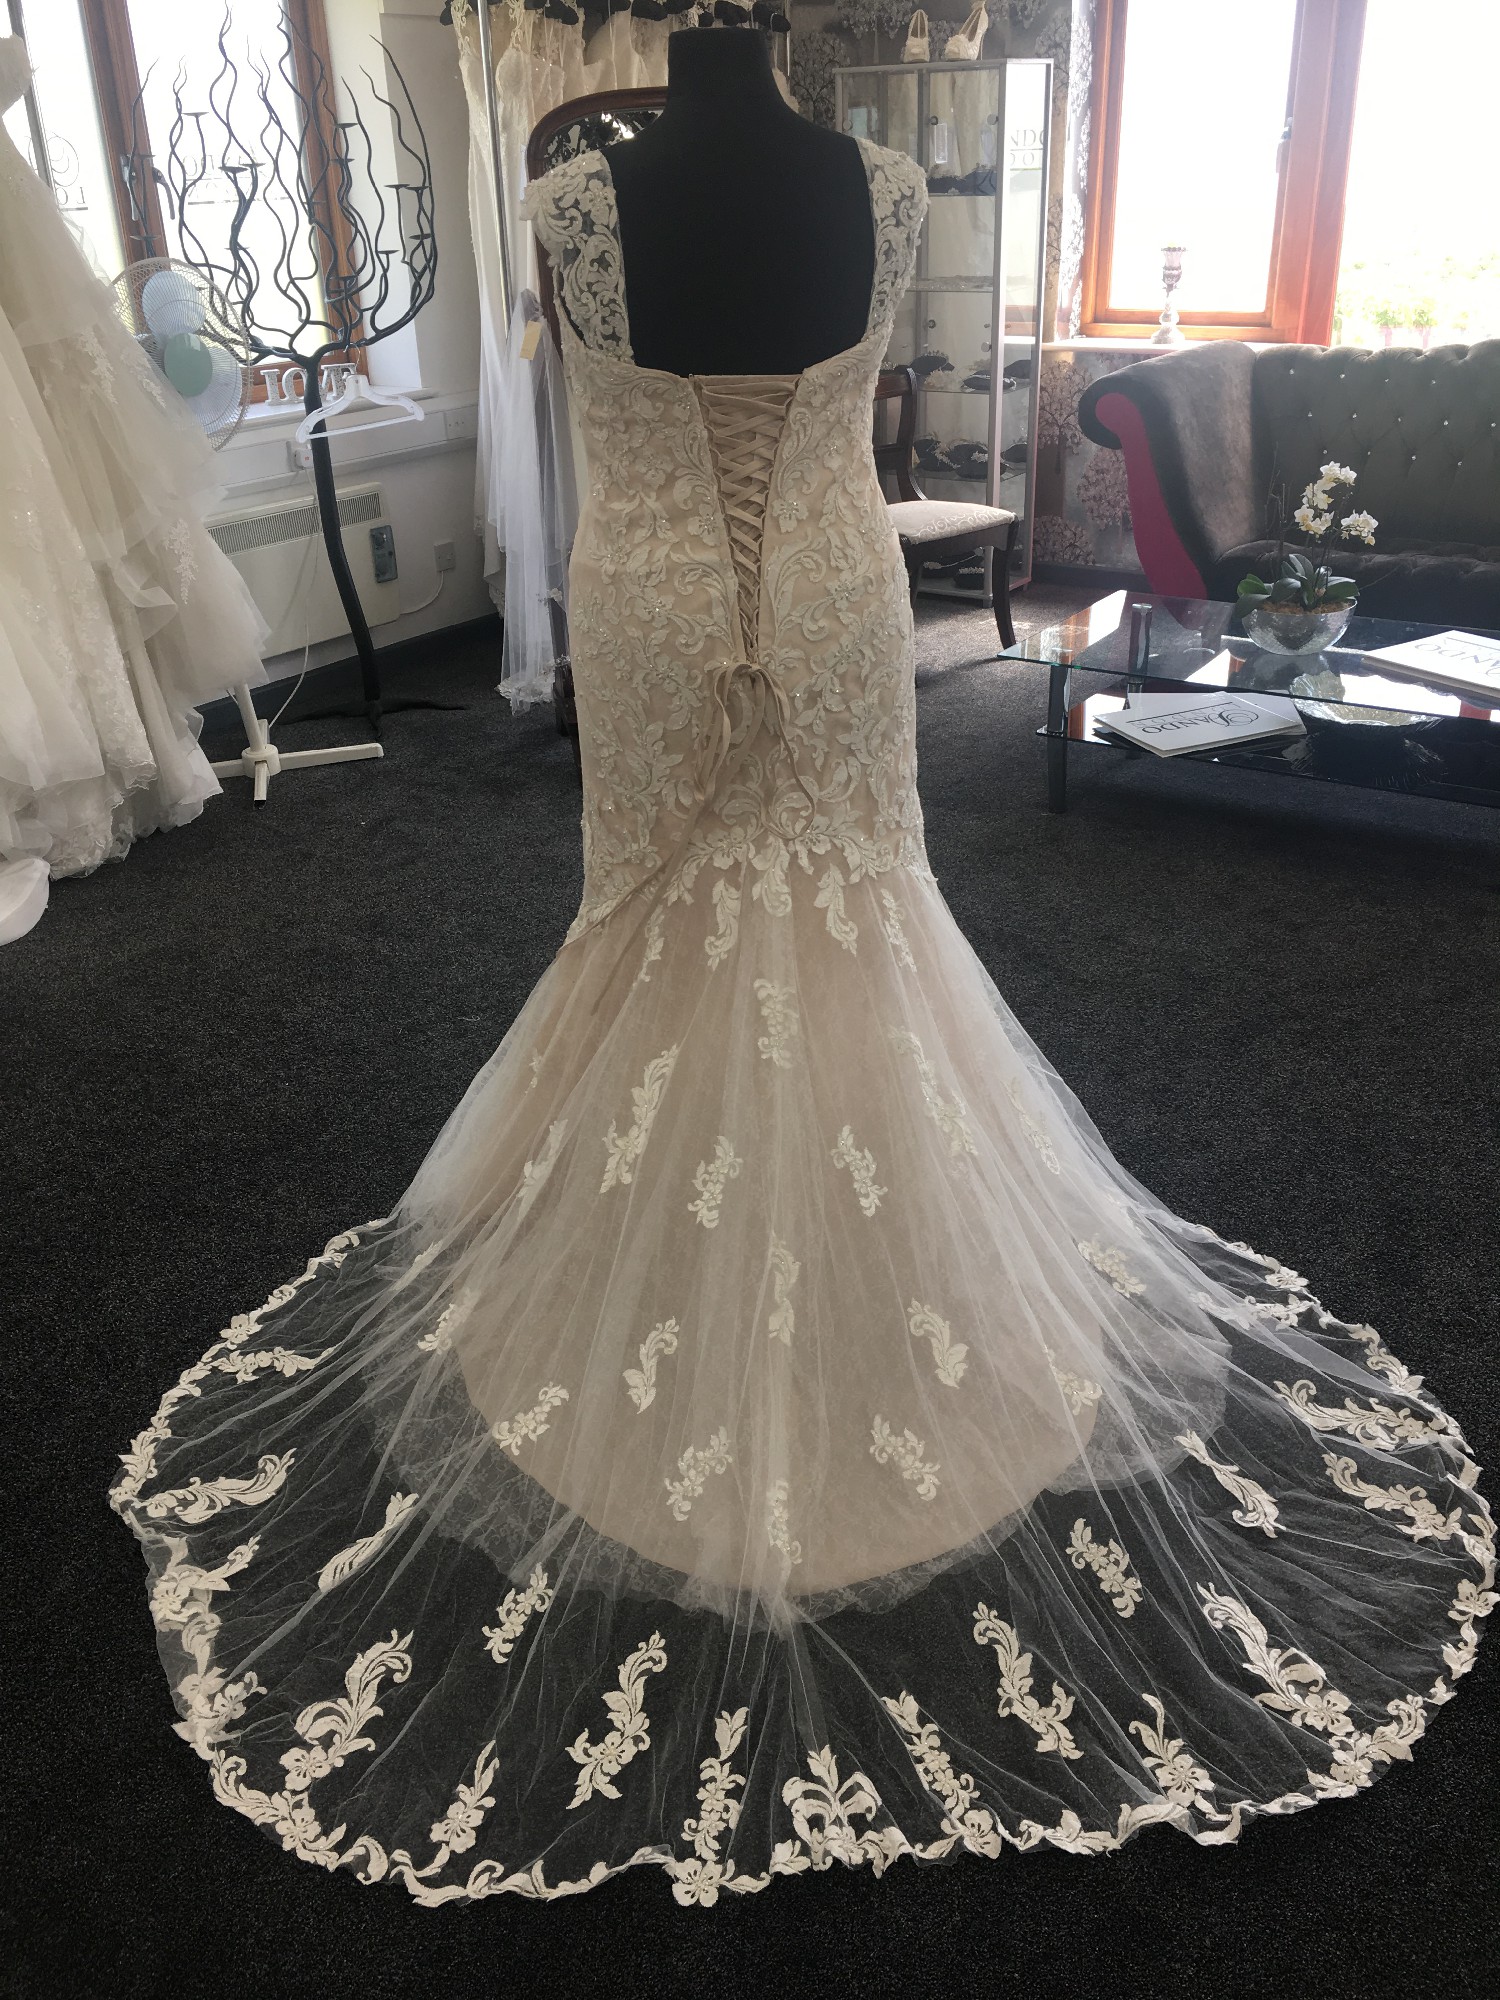 Confetti And Lace Sample Wedding Dress On Sale 77 Off Stillwhite United Kingdom 8950